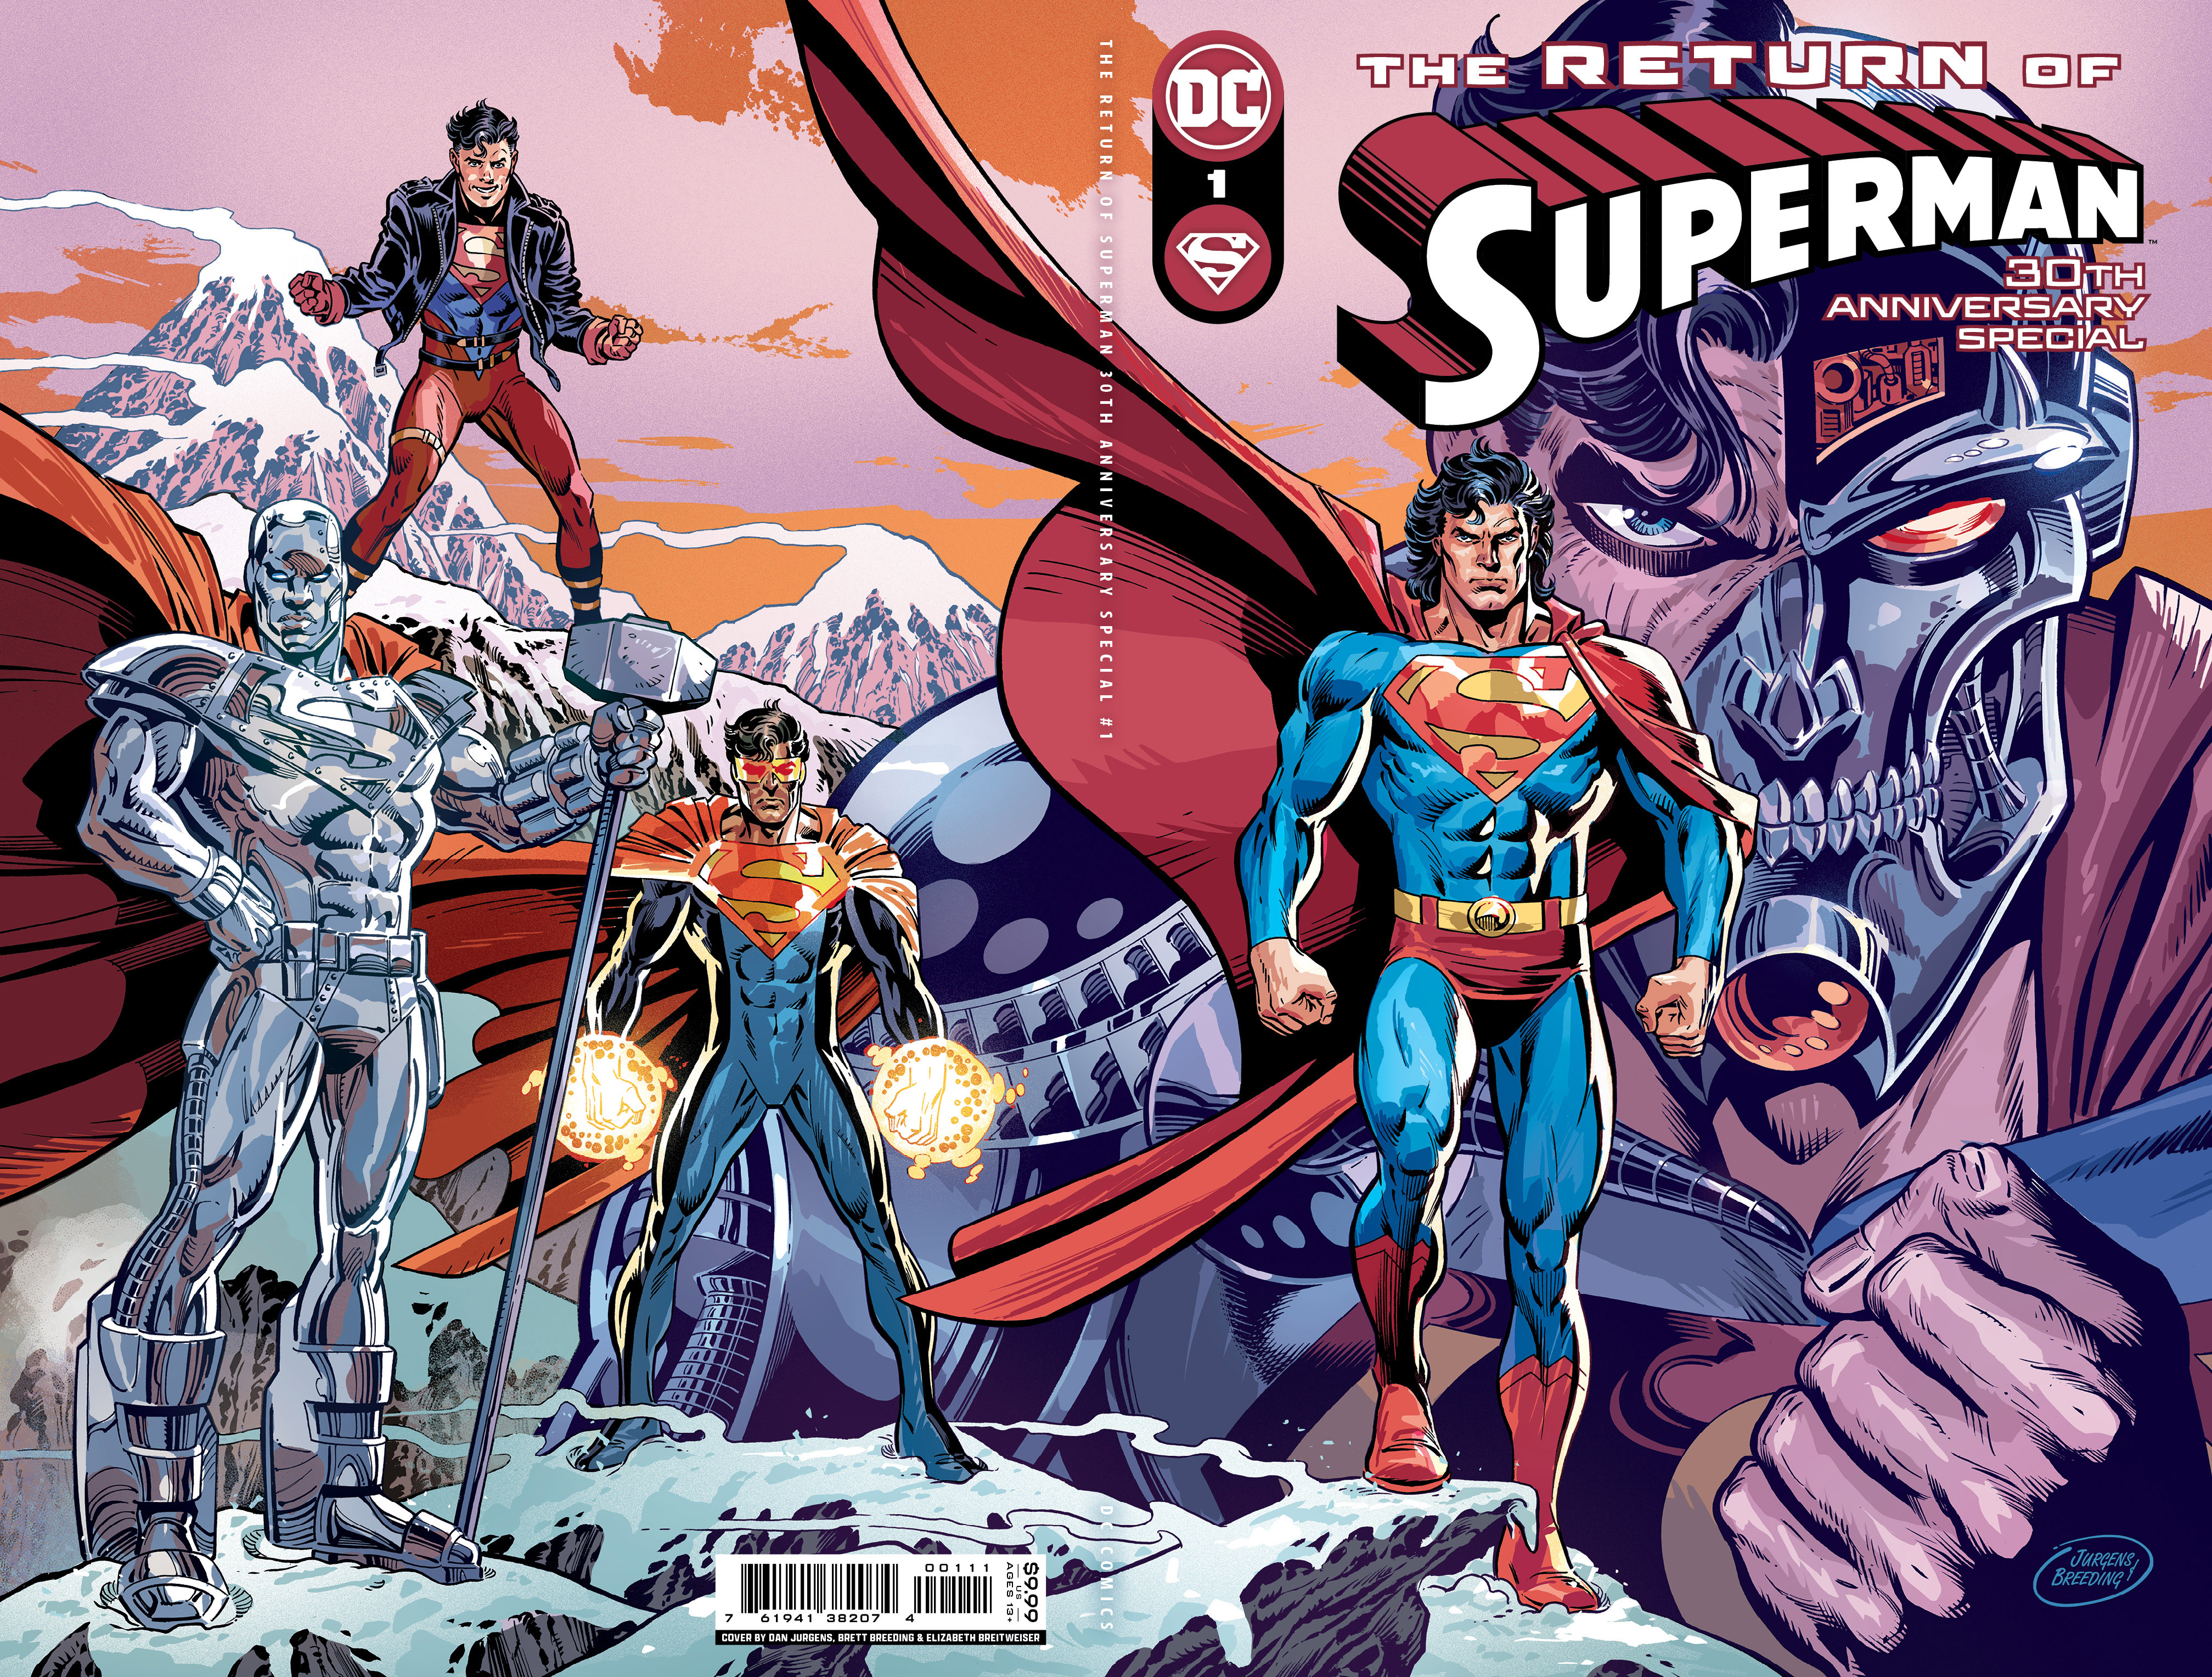 Return of Superman 30th Anniversary Special #1 (One Shot) Cover A Dan Jurgens